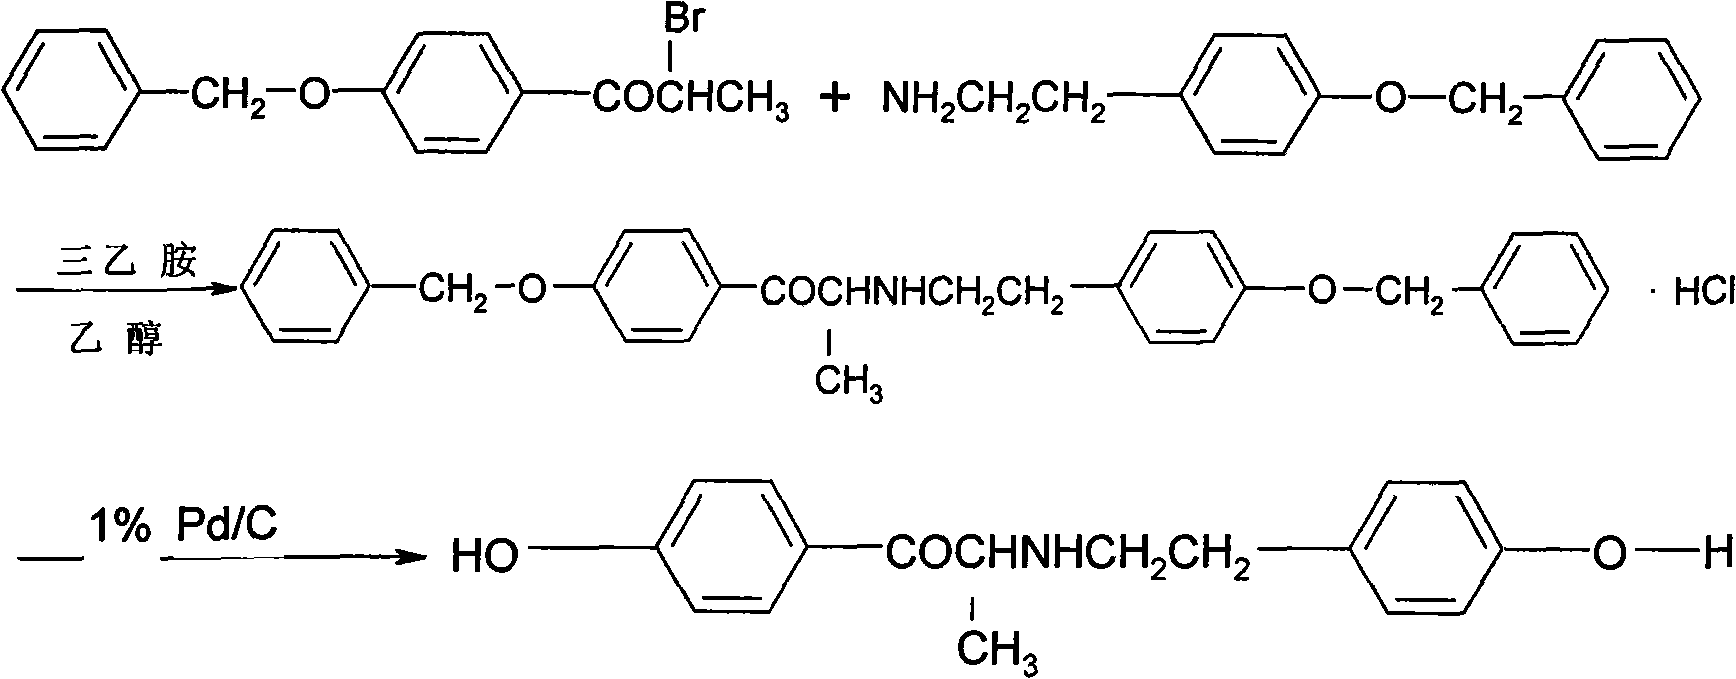 Ritodrine hydrochloride preparation method